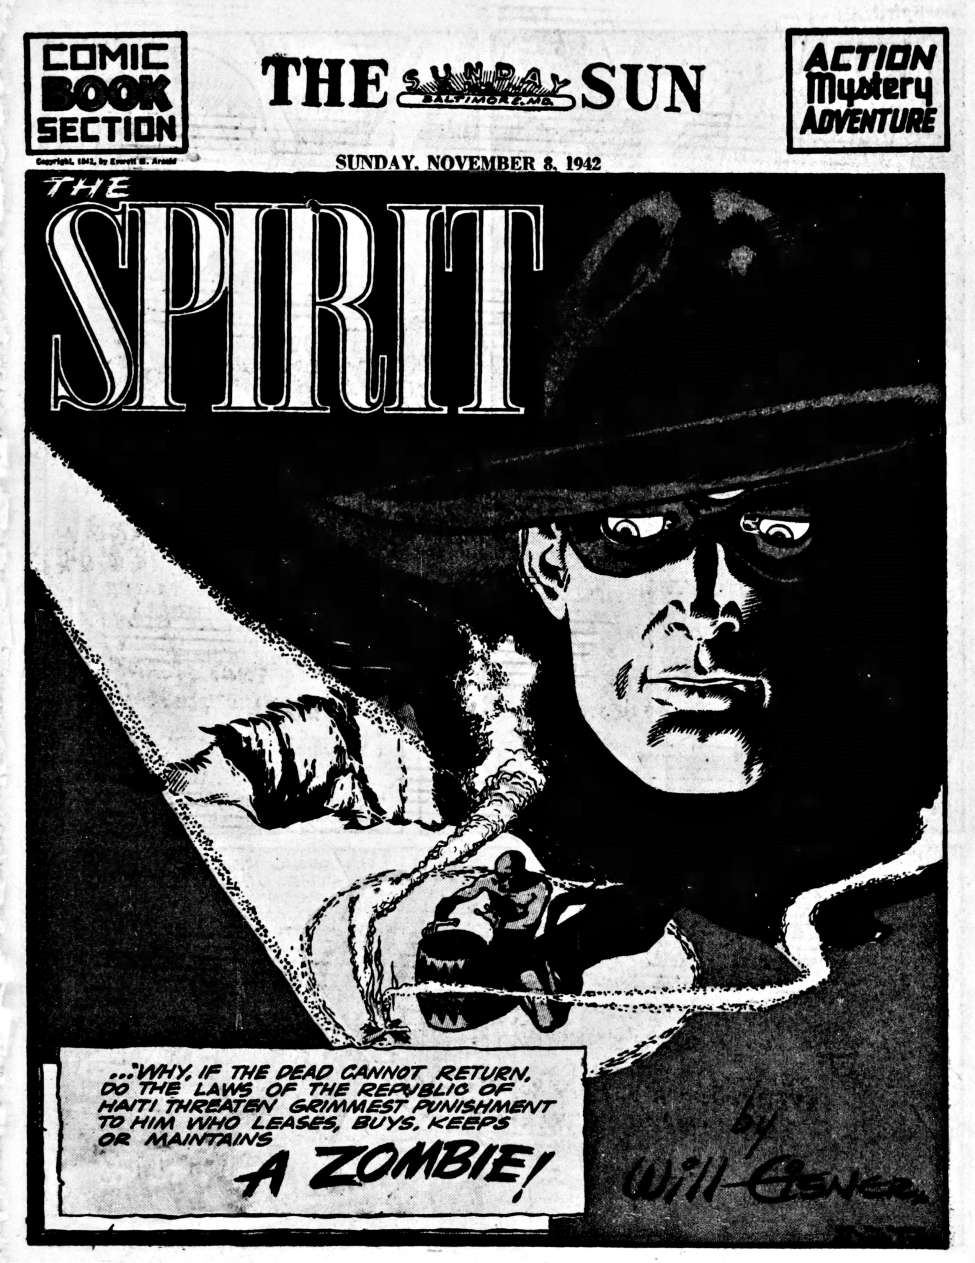 Book Cover For The Spirit (1942-11-08) - Baltimore Sun (b/w)